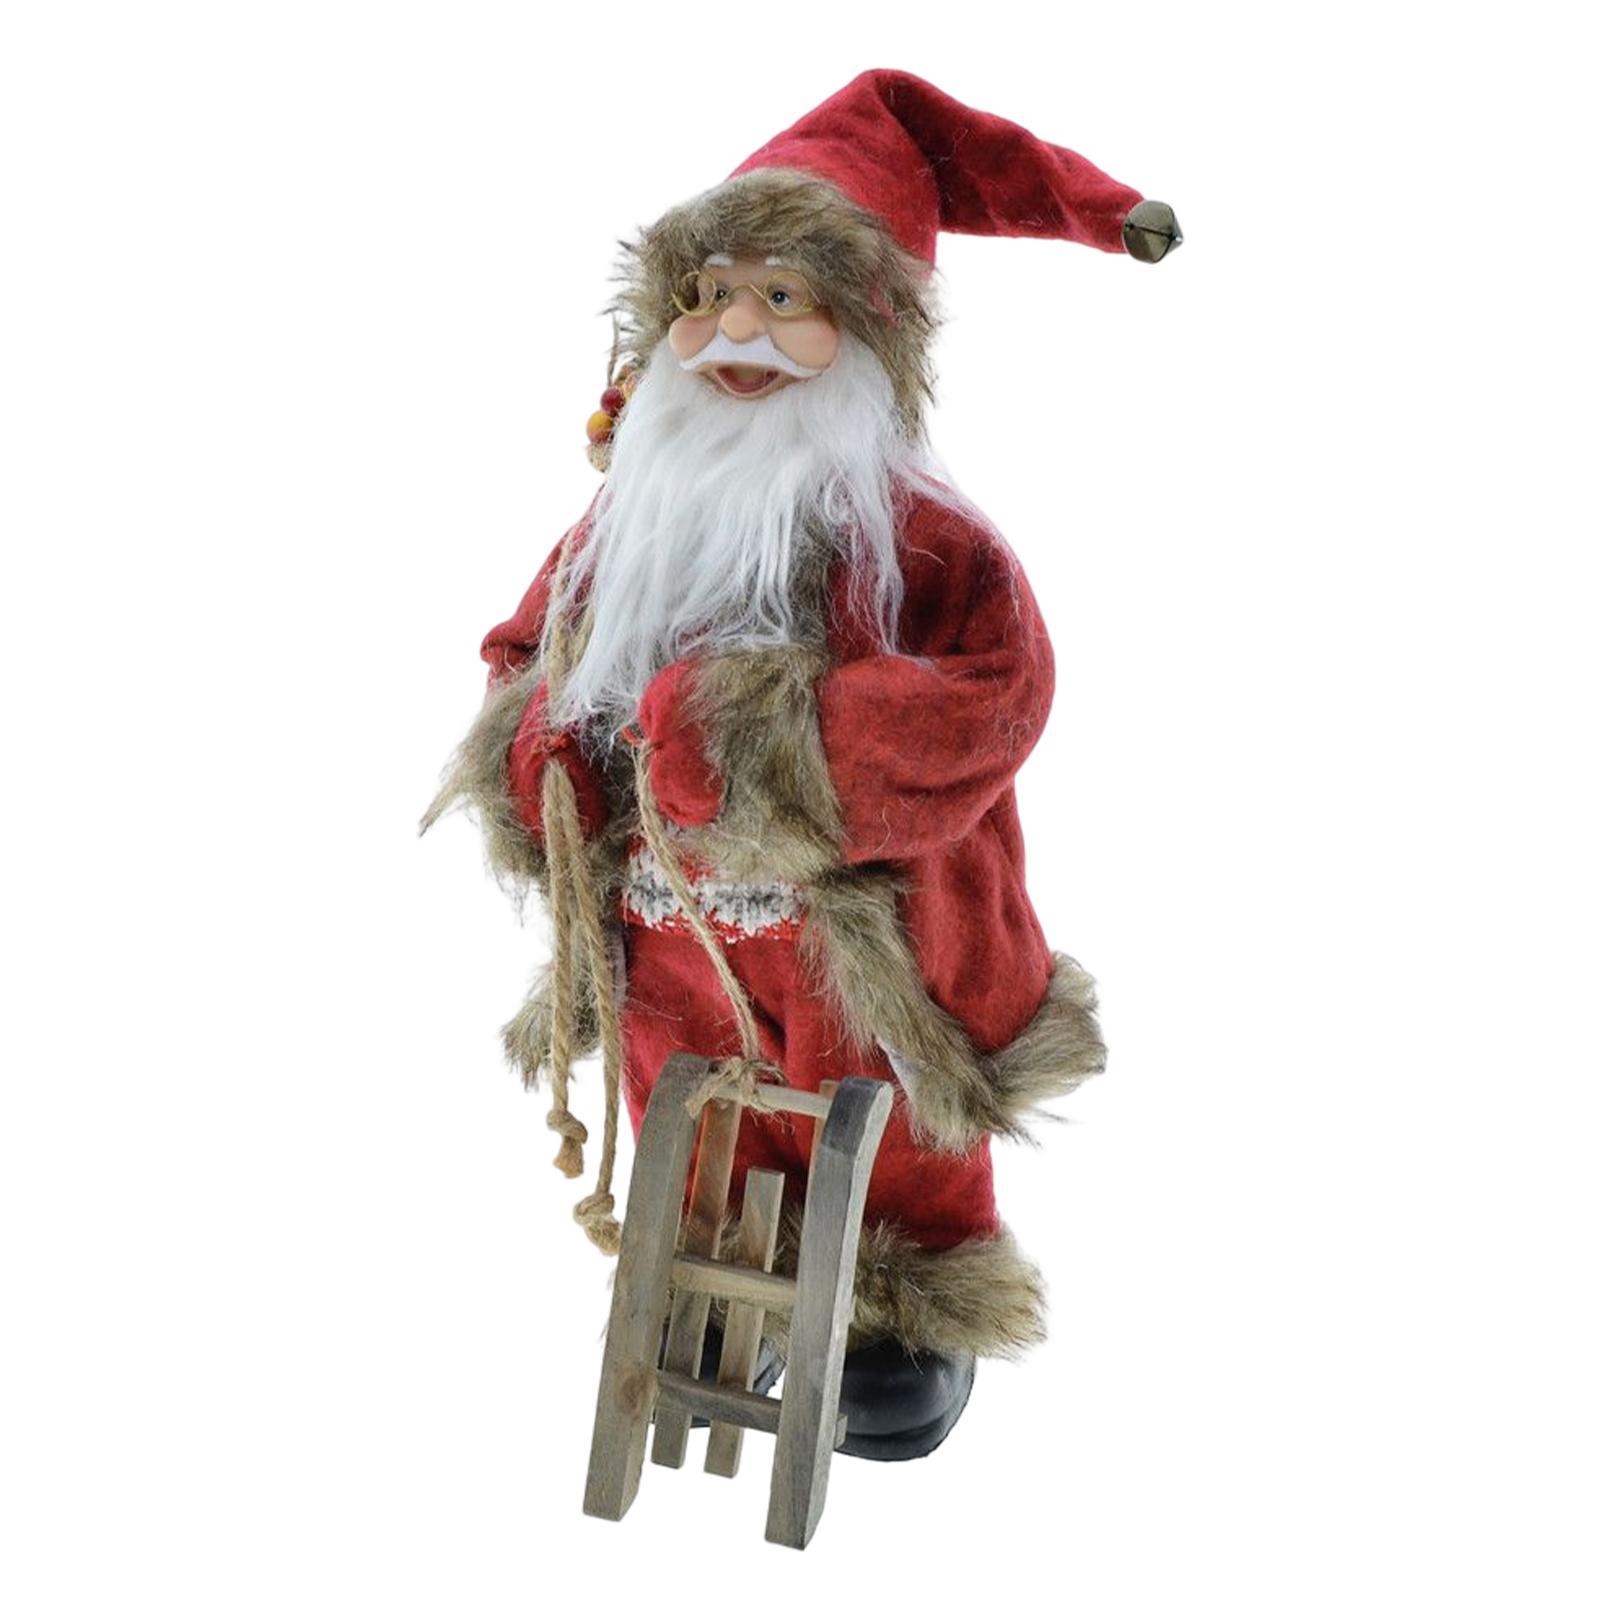 30cm Christmas Standing Santa Plush Doll, Comfortable Toys Gift Delicate